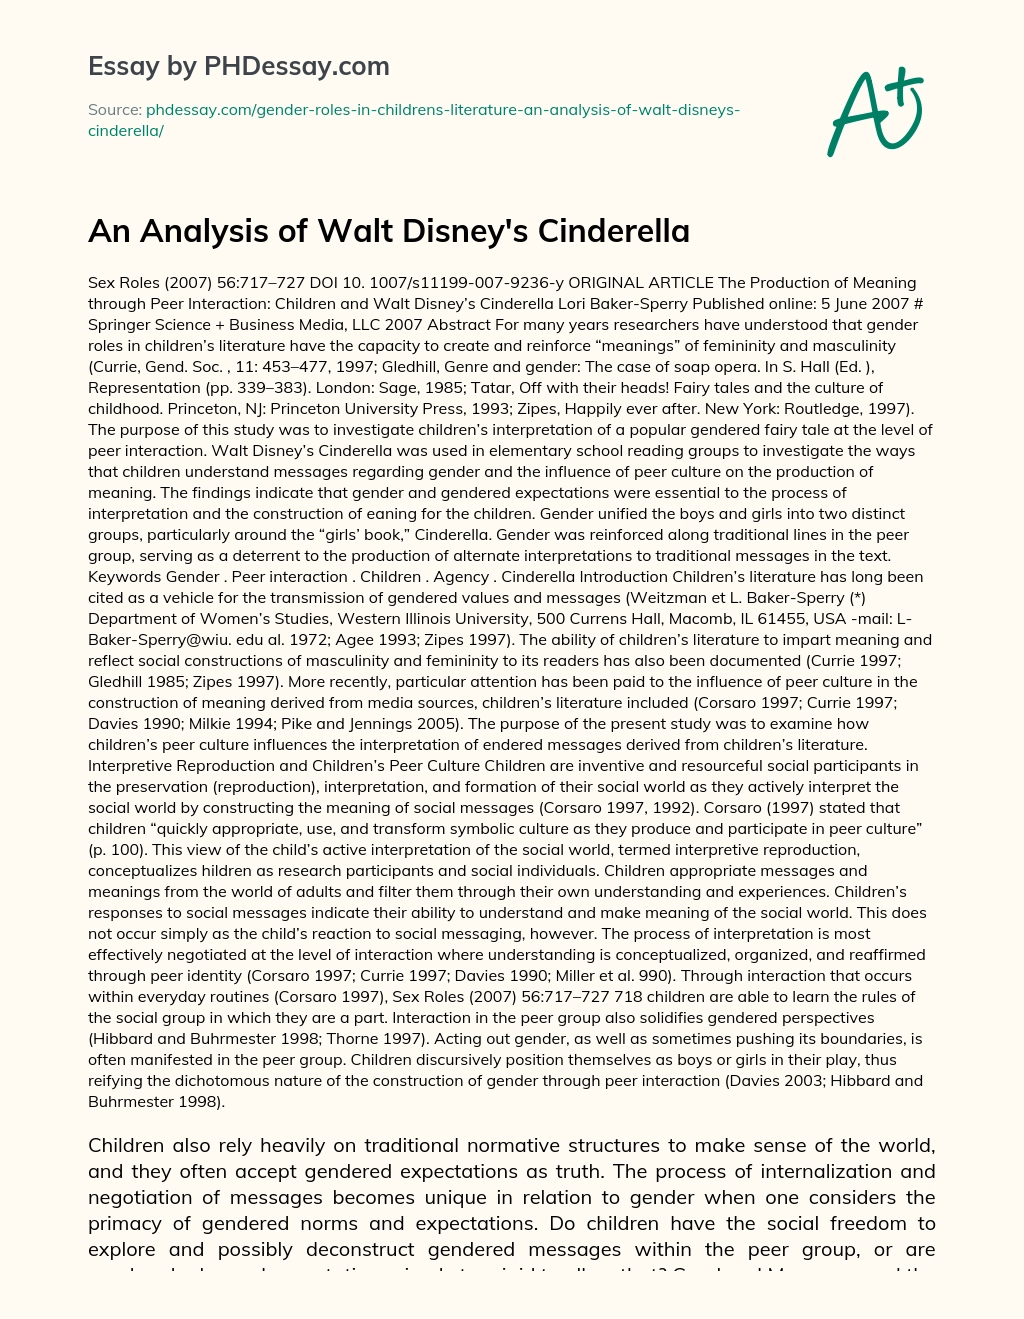 An Analysis of Walt Disney’s Cinderella essay